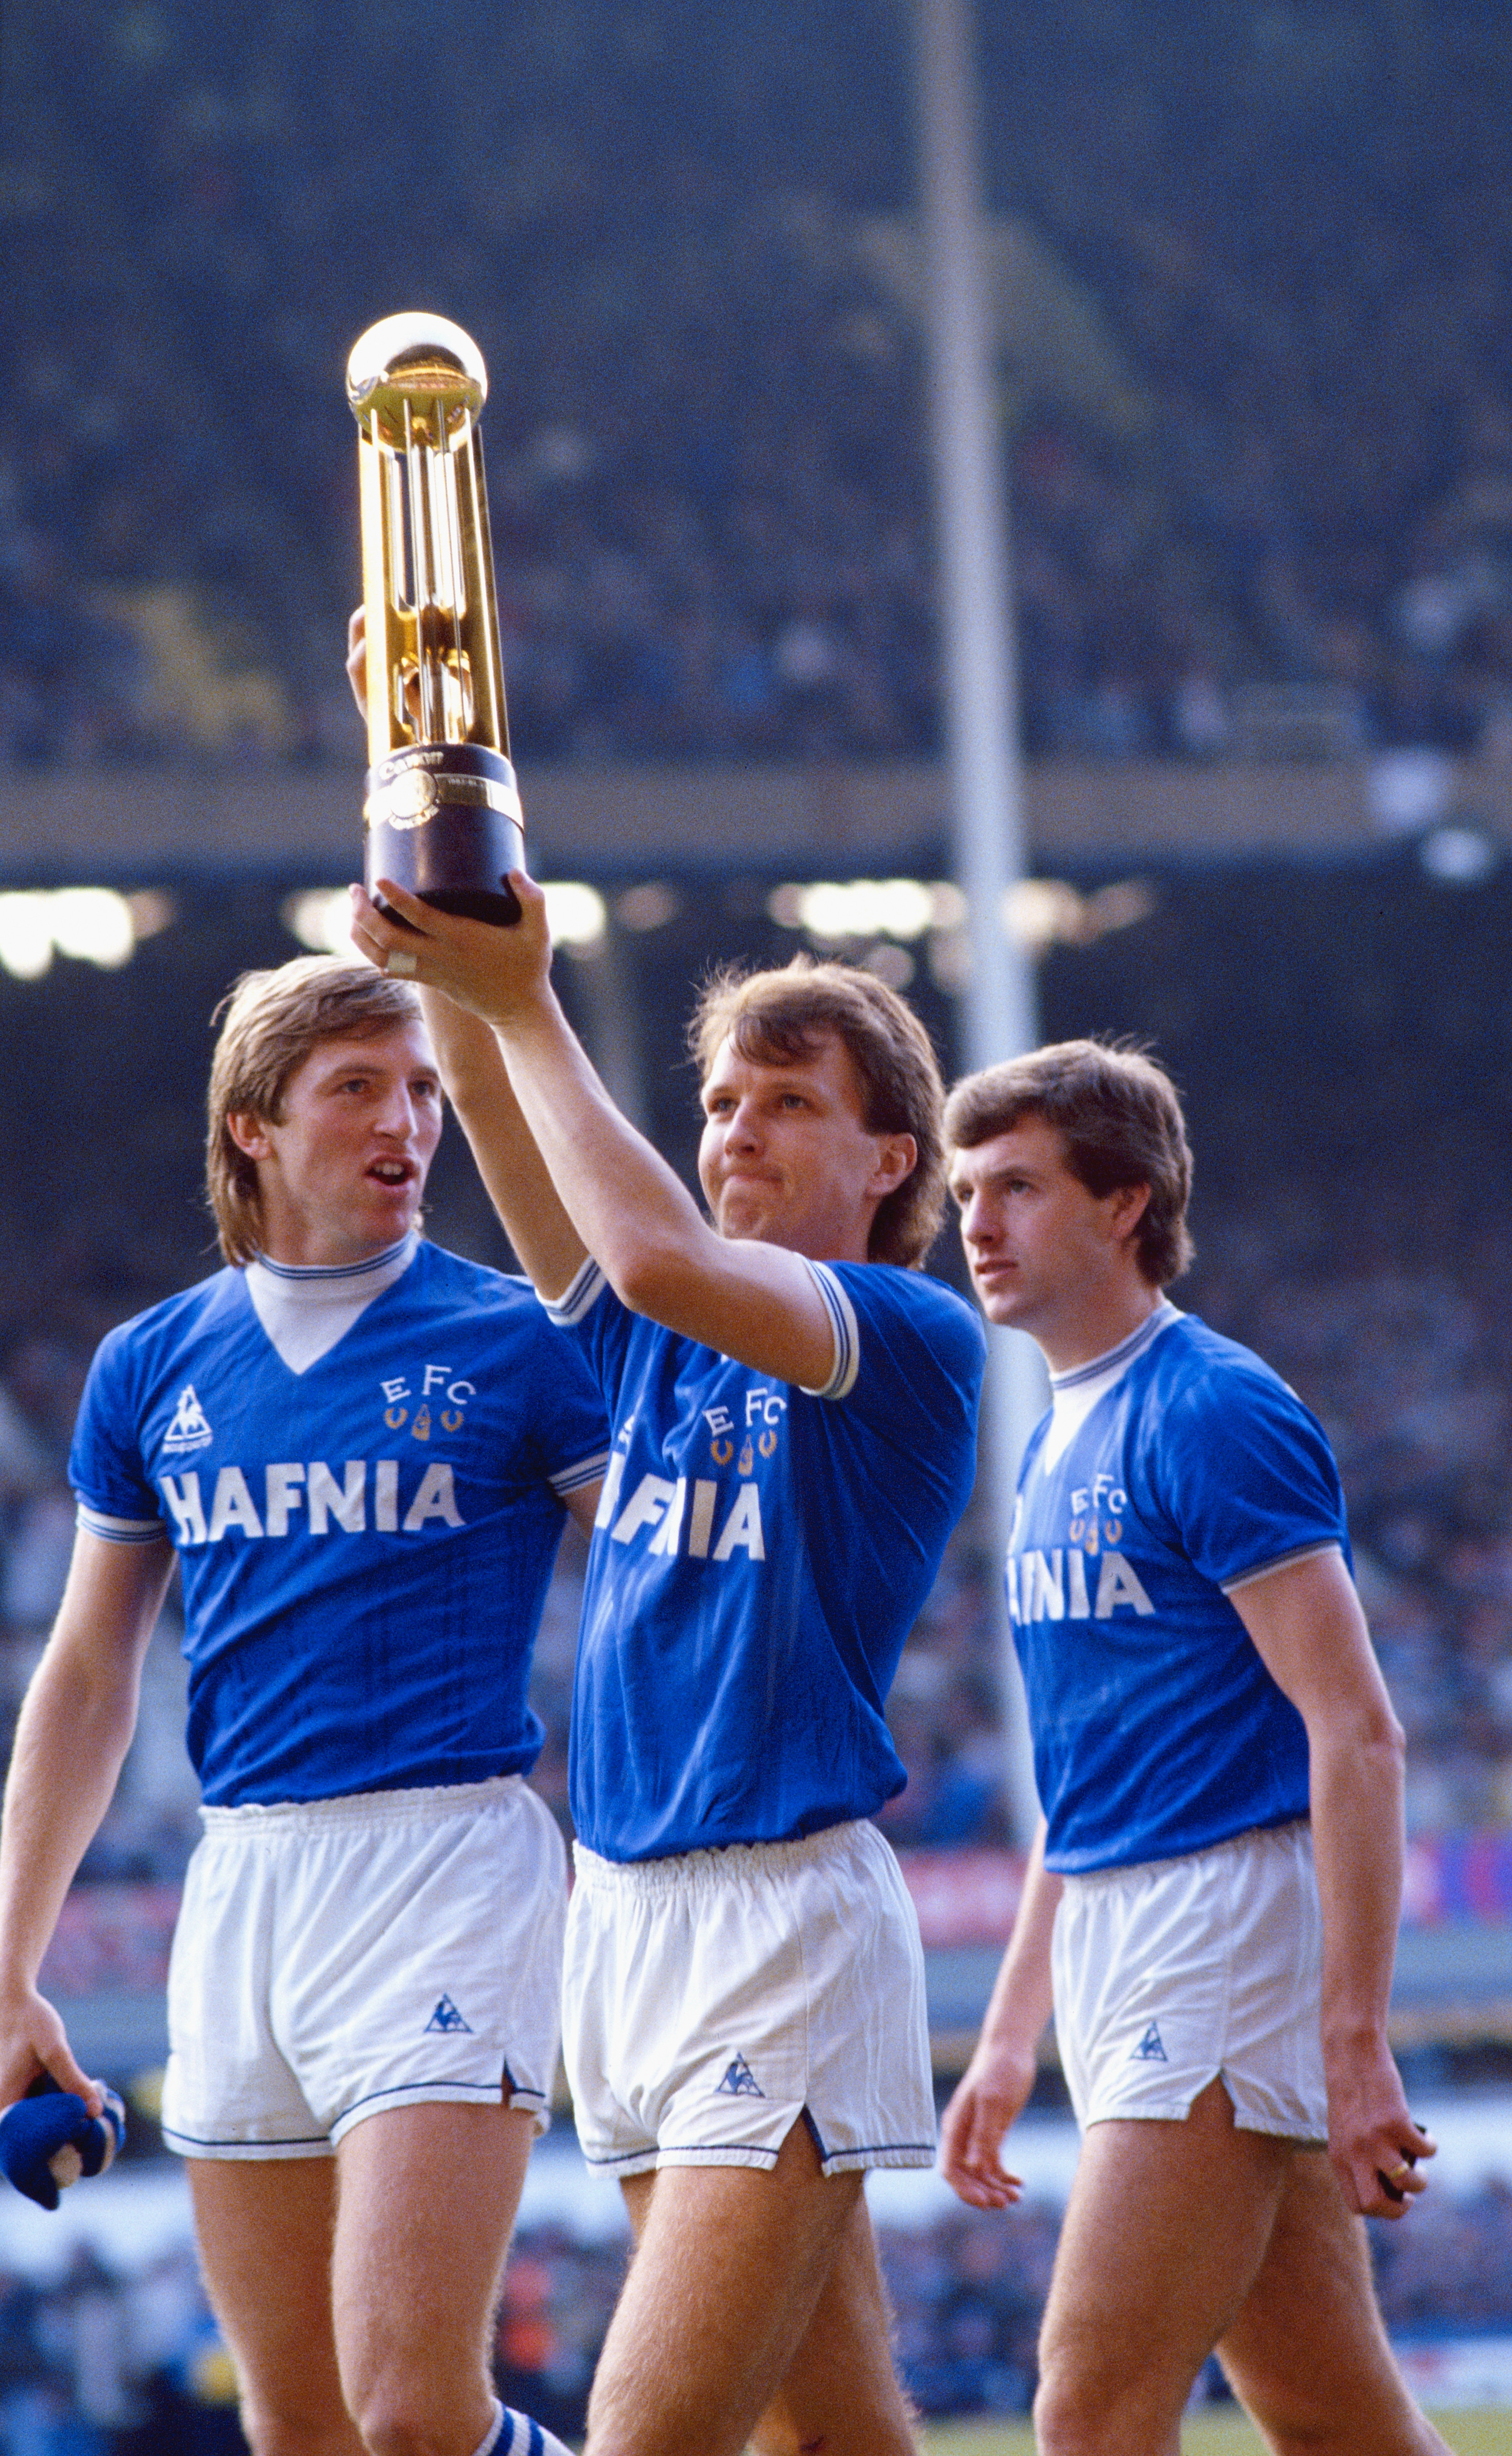 Everton League Champions 1984/85